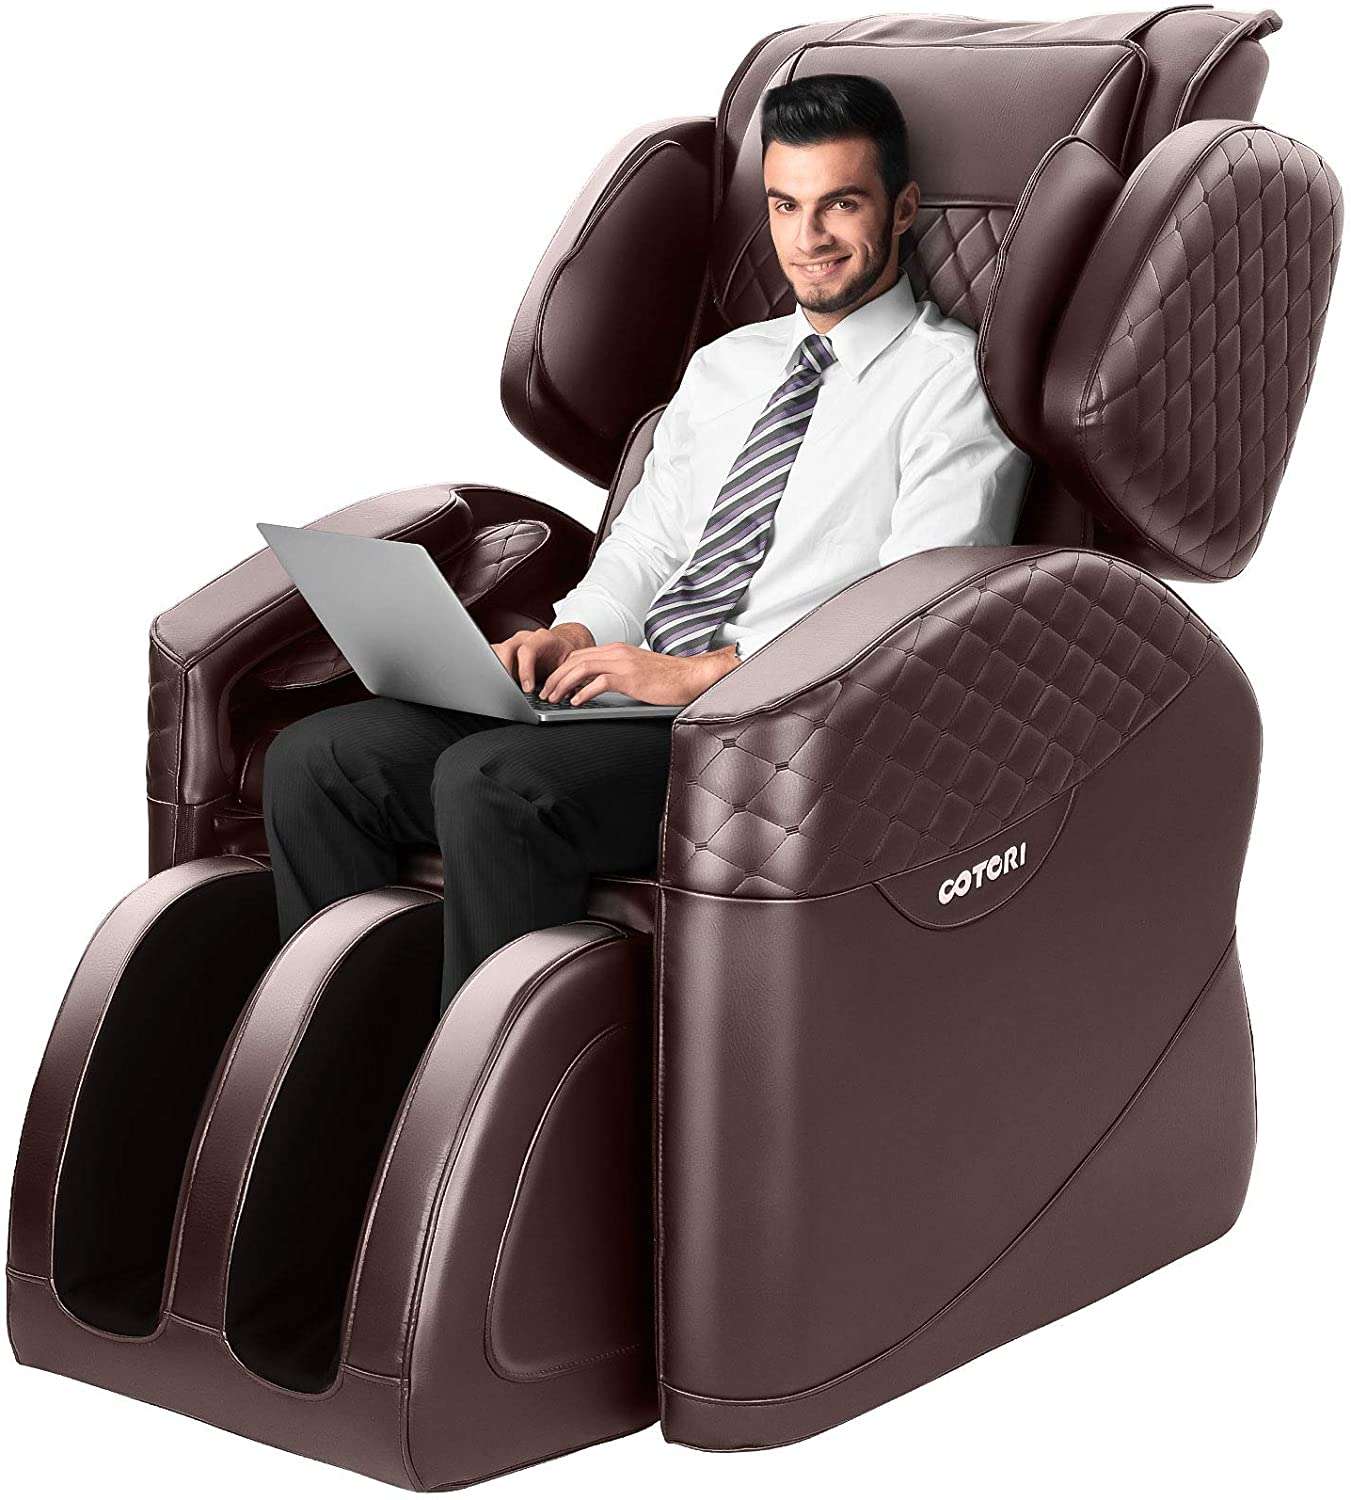 Amazon.com: OOTORI 2020 Massage Chair, Full Body Zero ...